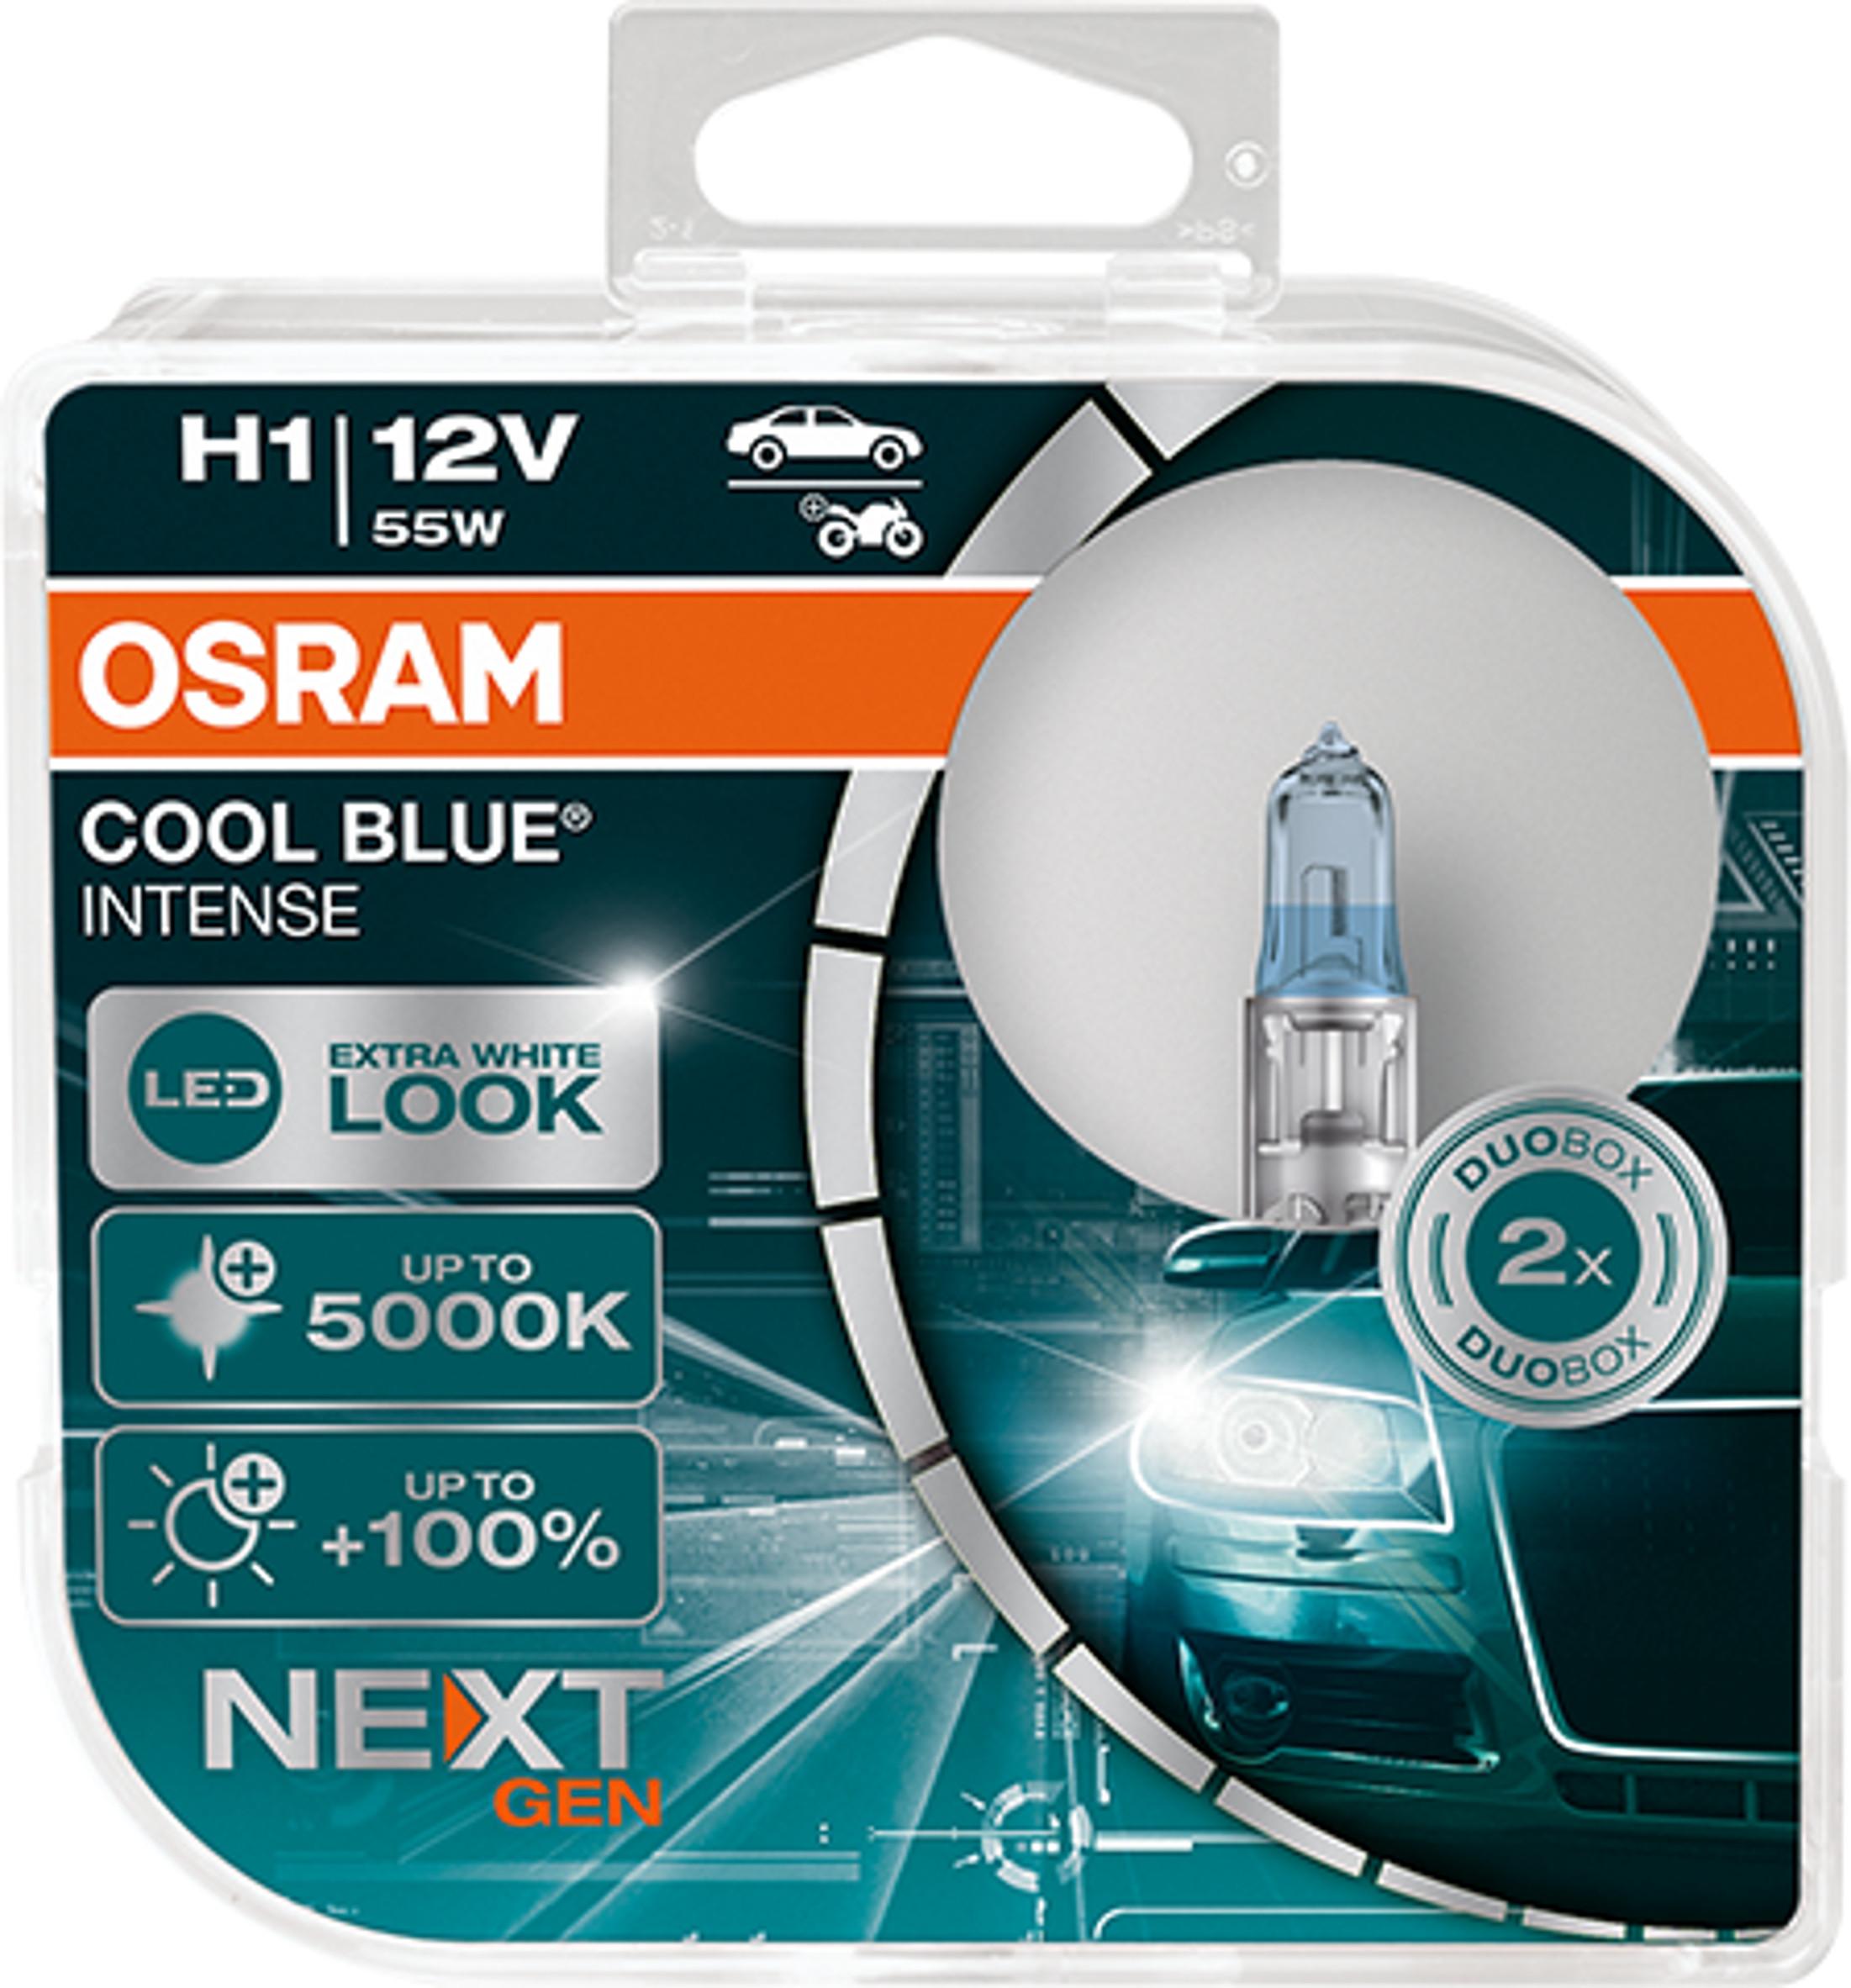 Lampade OSRAM H1 COOL BLUE® INTENSE NEXT GENERATION Duo Box